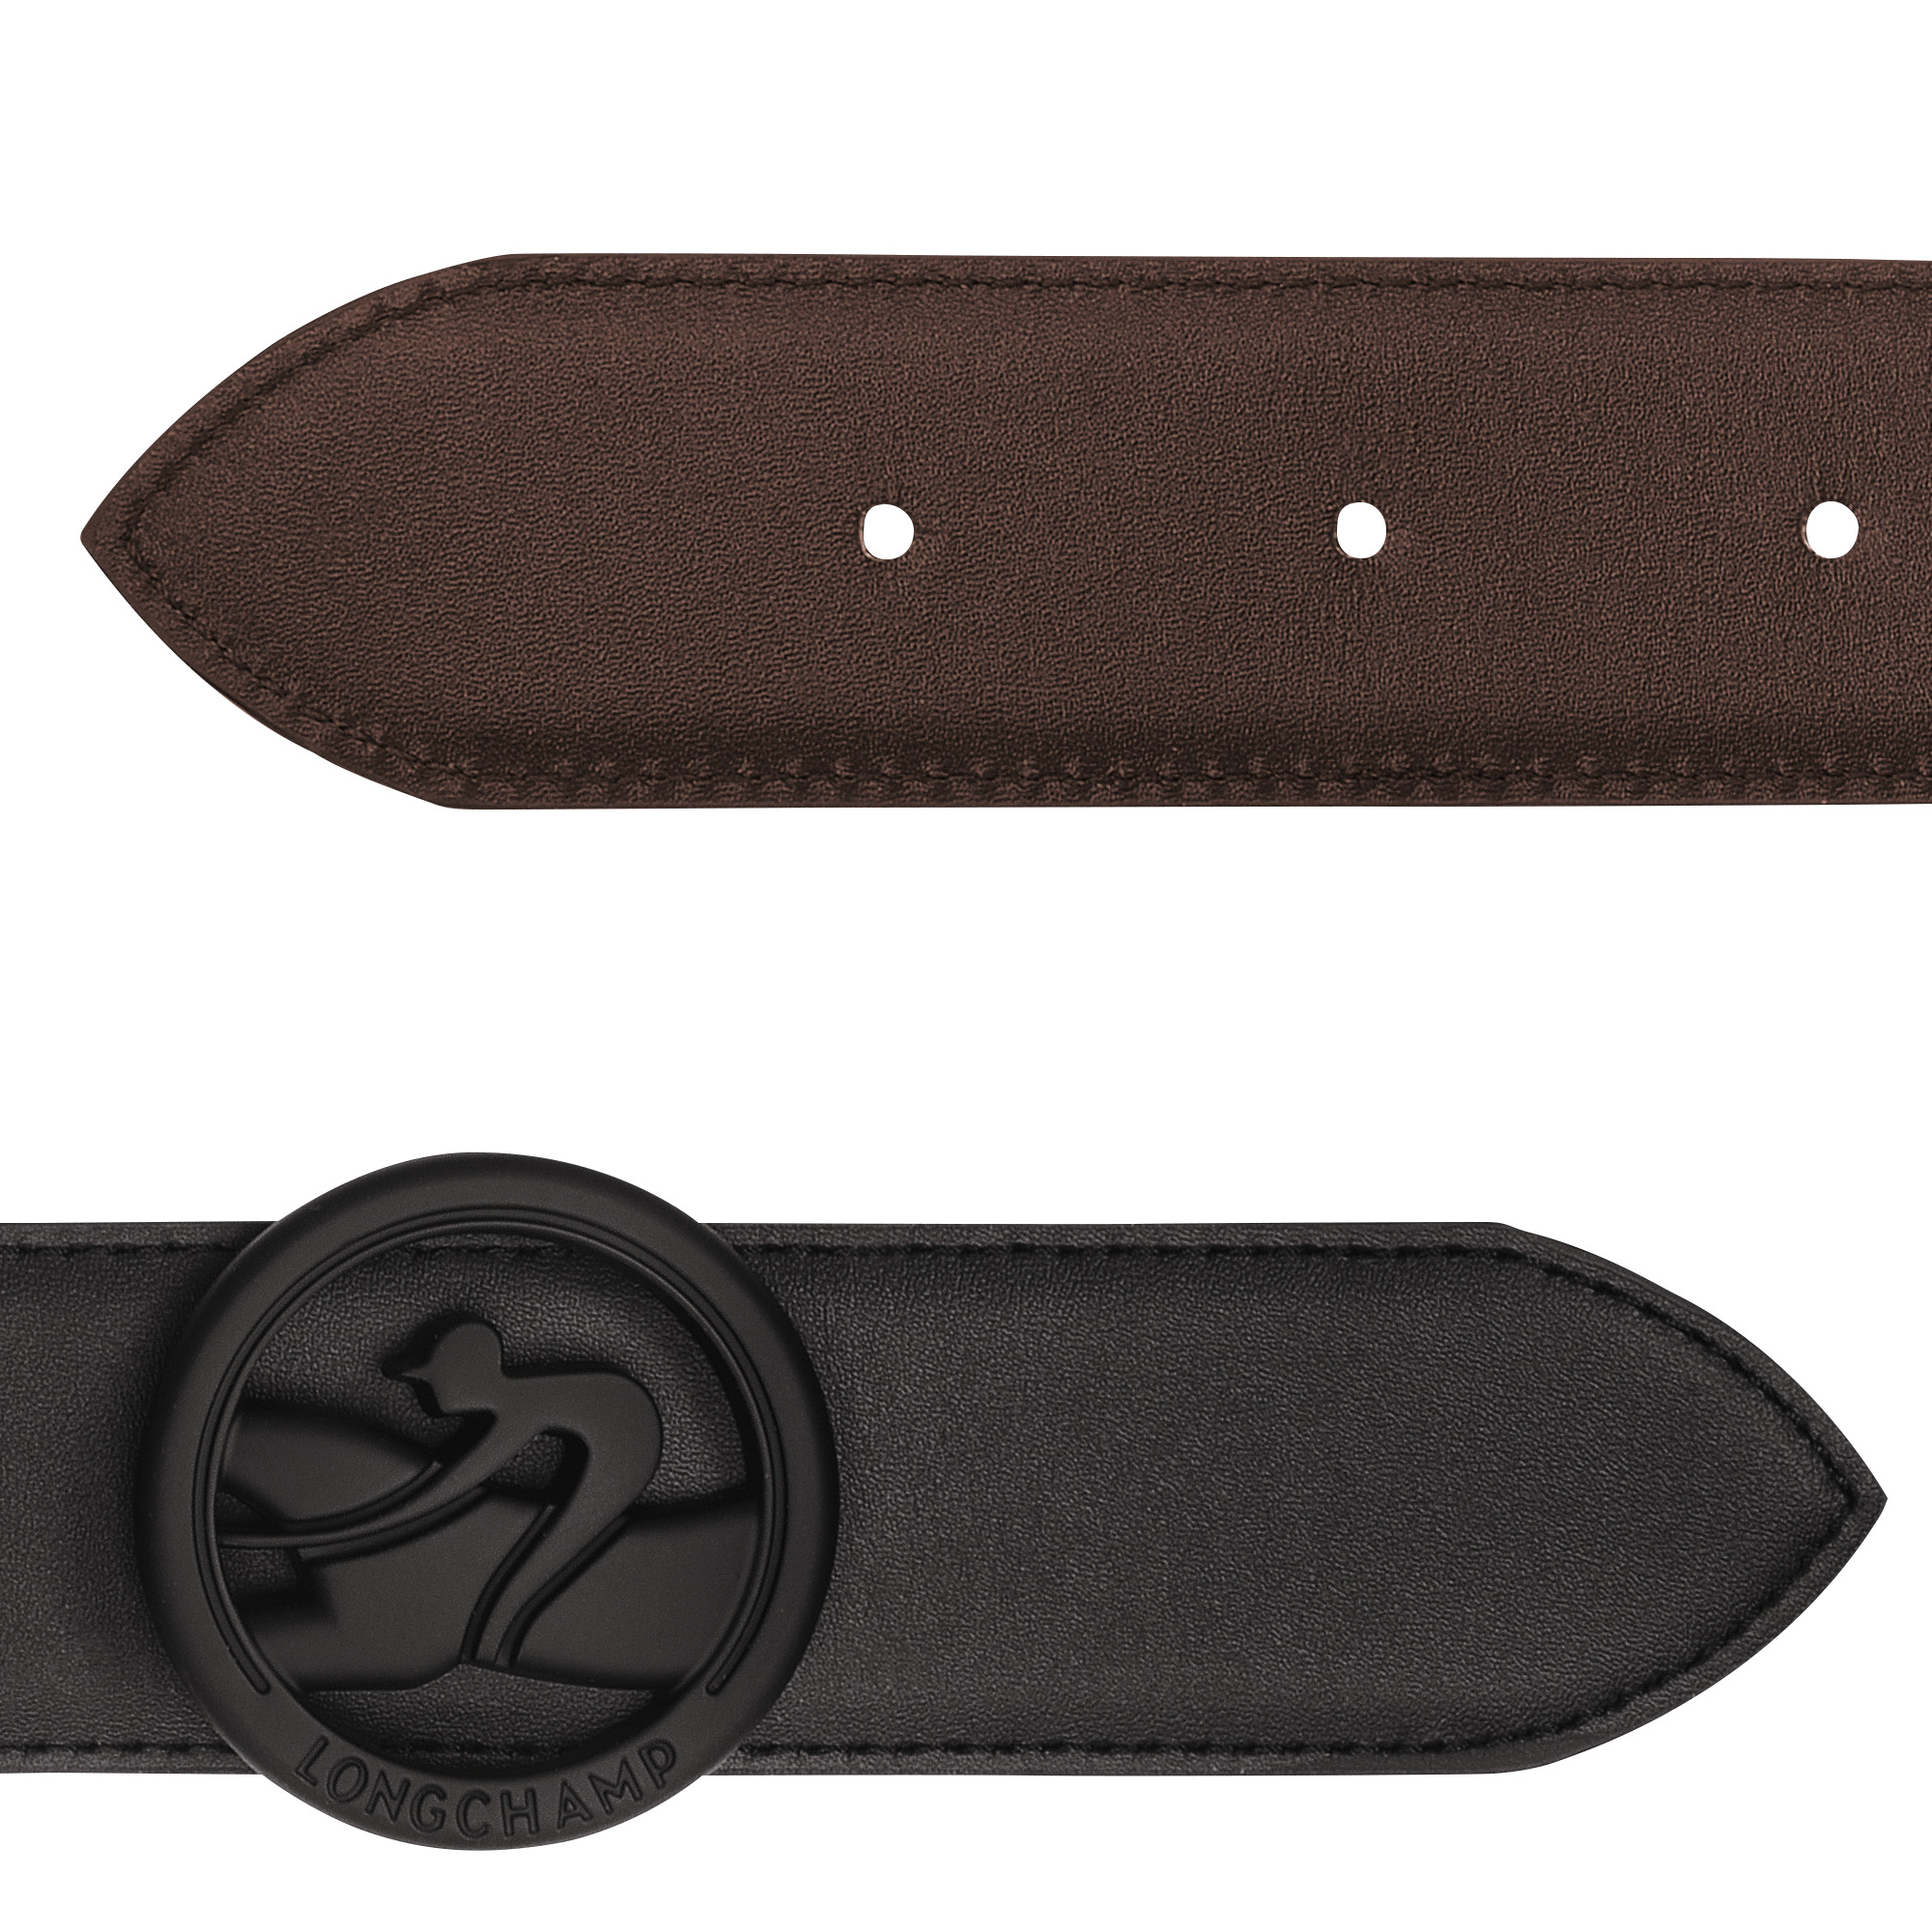 Box-Trot Men's belt Black/Ebony - Leather - 3